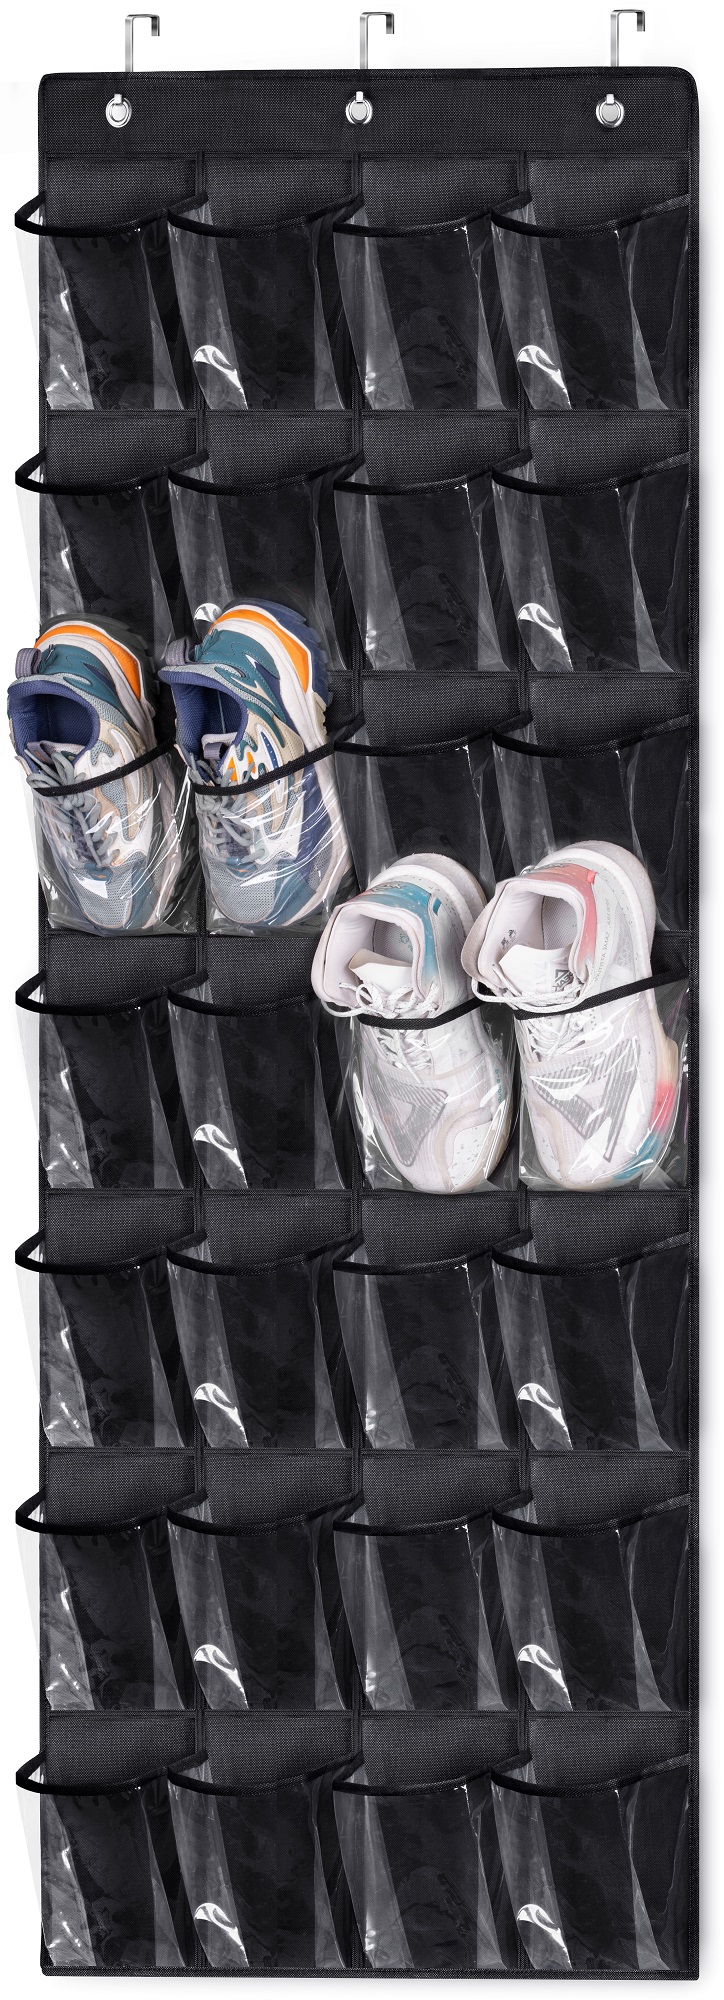 KEETDY Over the Door Shoe Organizer with 8 Deep Pockets, Hanging Shoe Rack  for Closet Hanger Fits 20 Pairs Shoe Holder for Narrow Door Shoe Storage